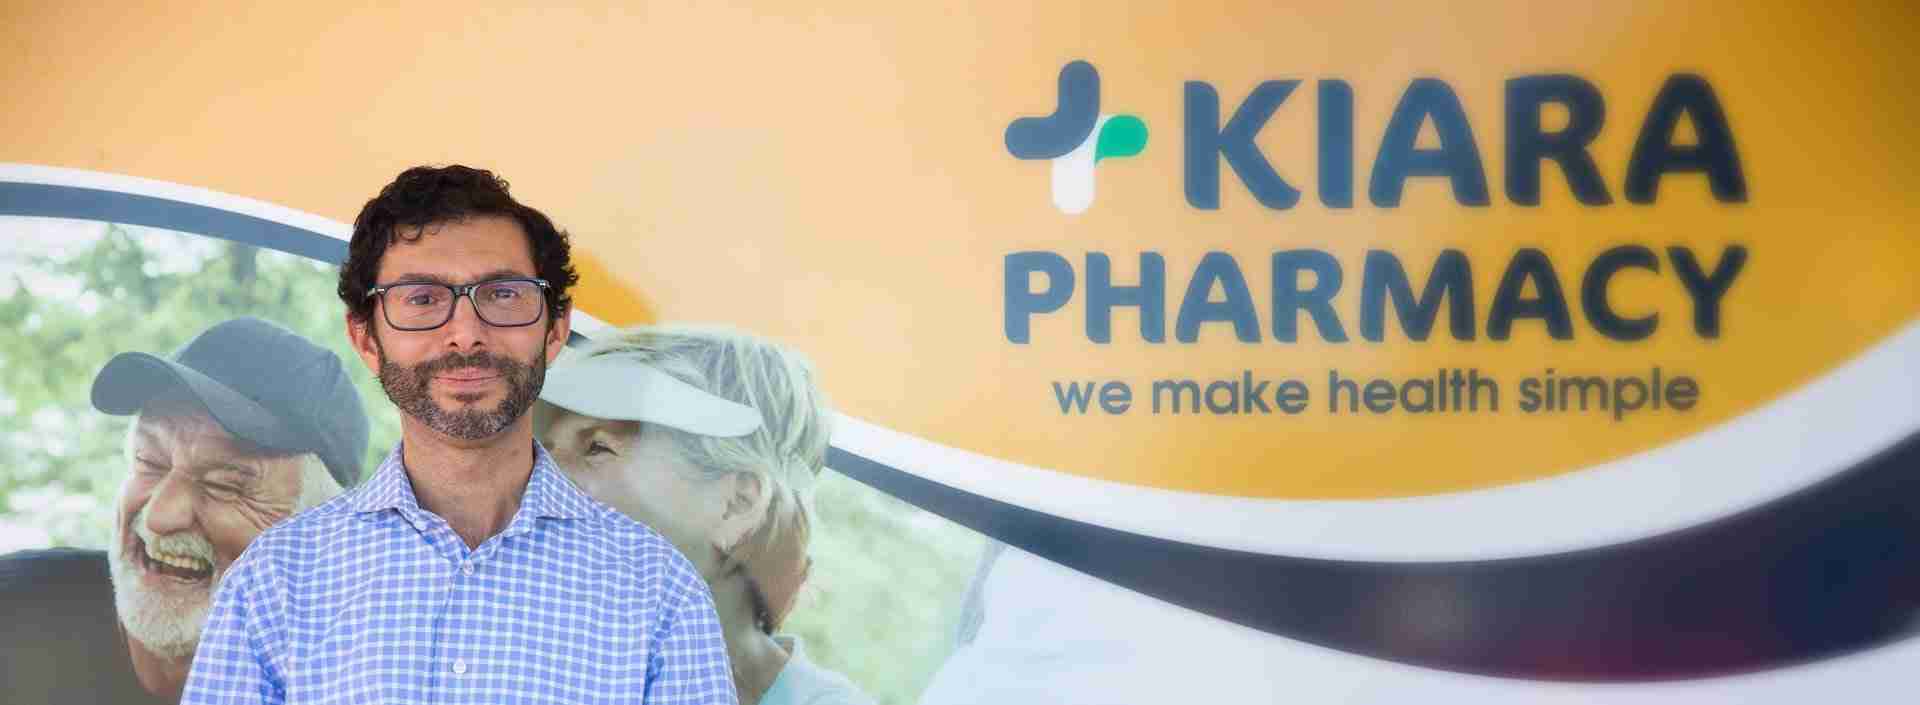 Kiara Pharmacy - Compounding Pharmacy Perth - Our Story